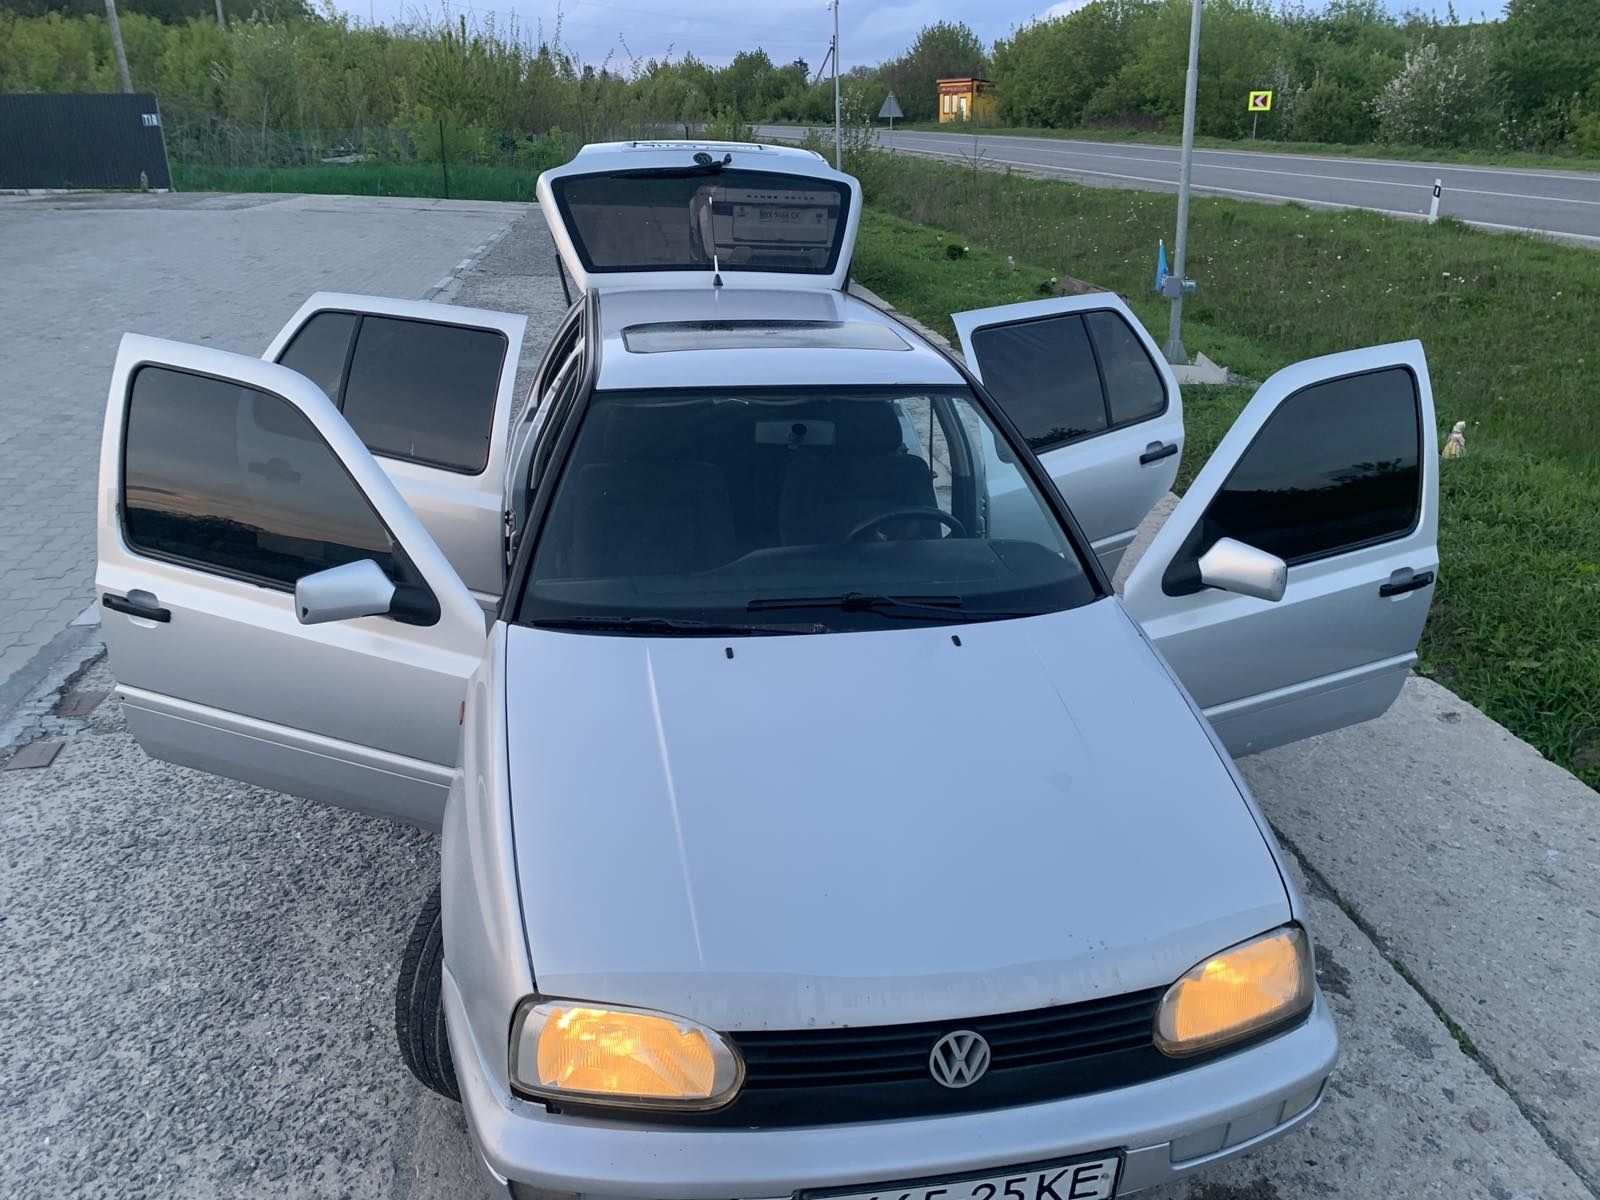 Volkswagen Golf 3 1997 рік, 1,8 газ/бензин